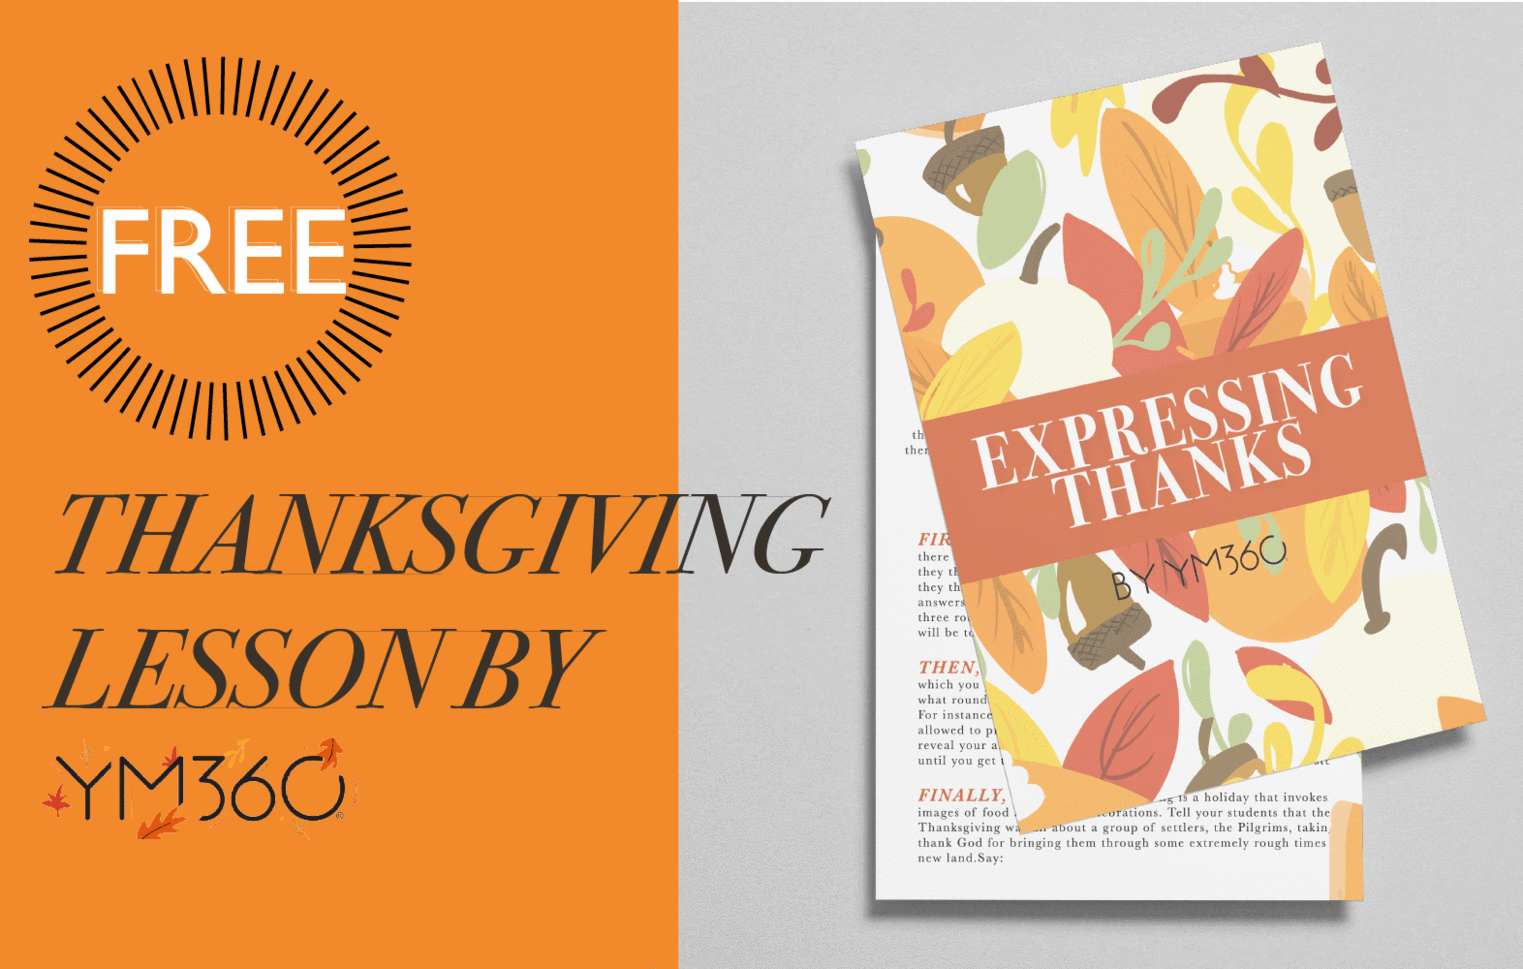 Free Thanksgiving Lesson | Expressing Thanks